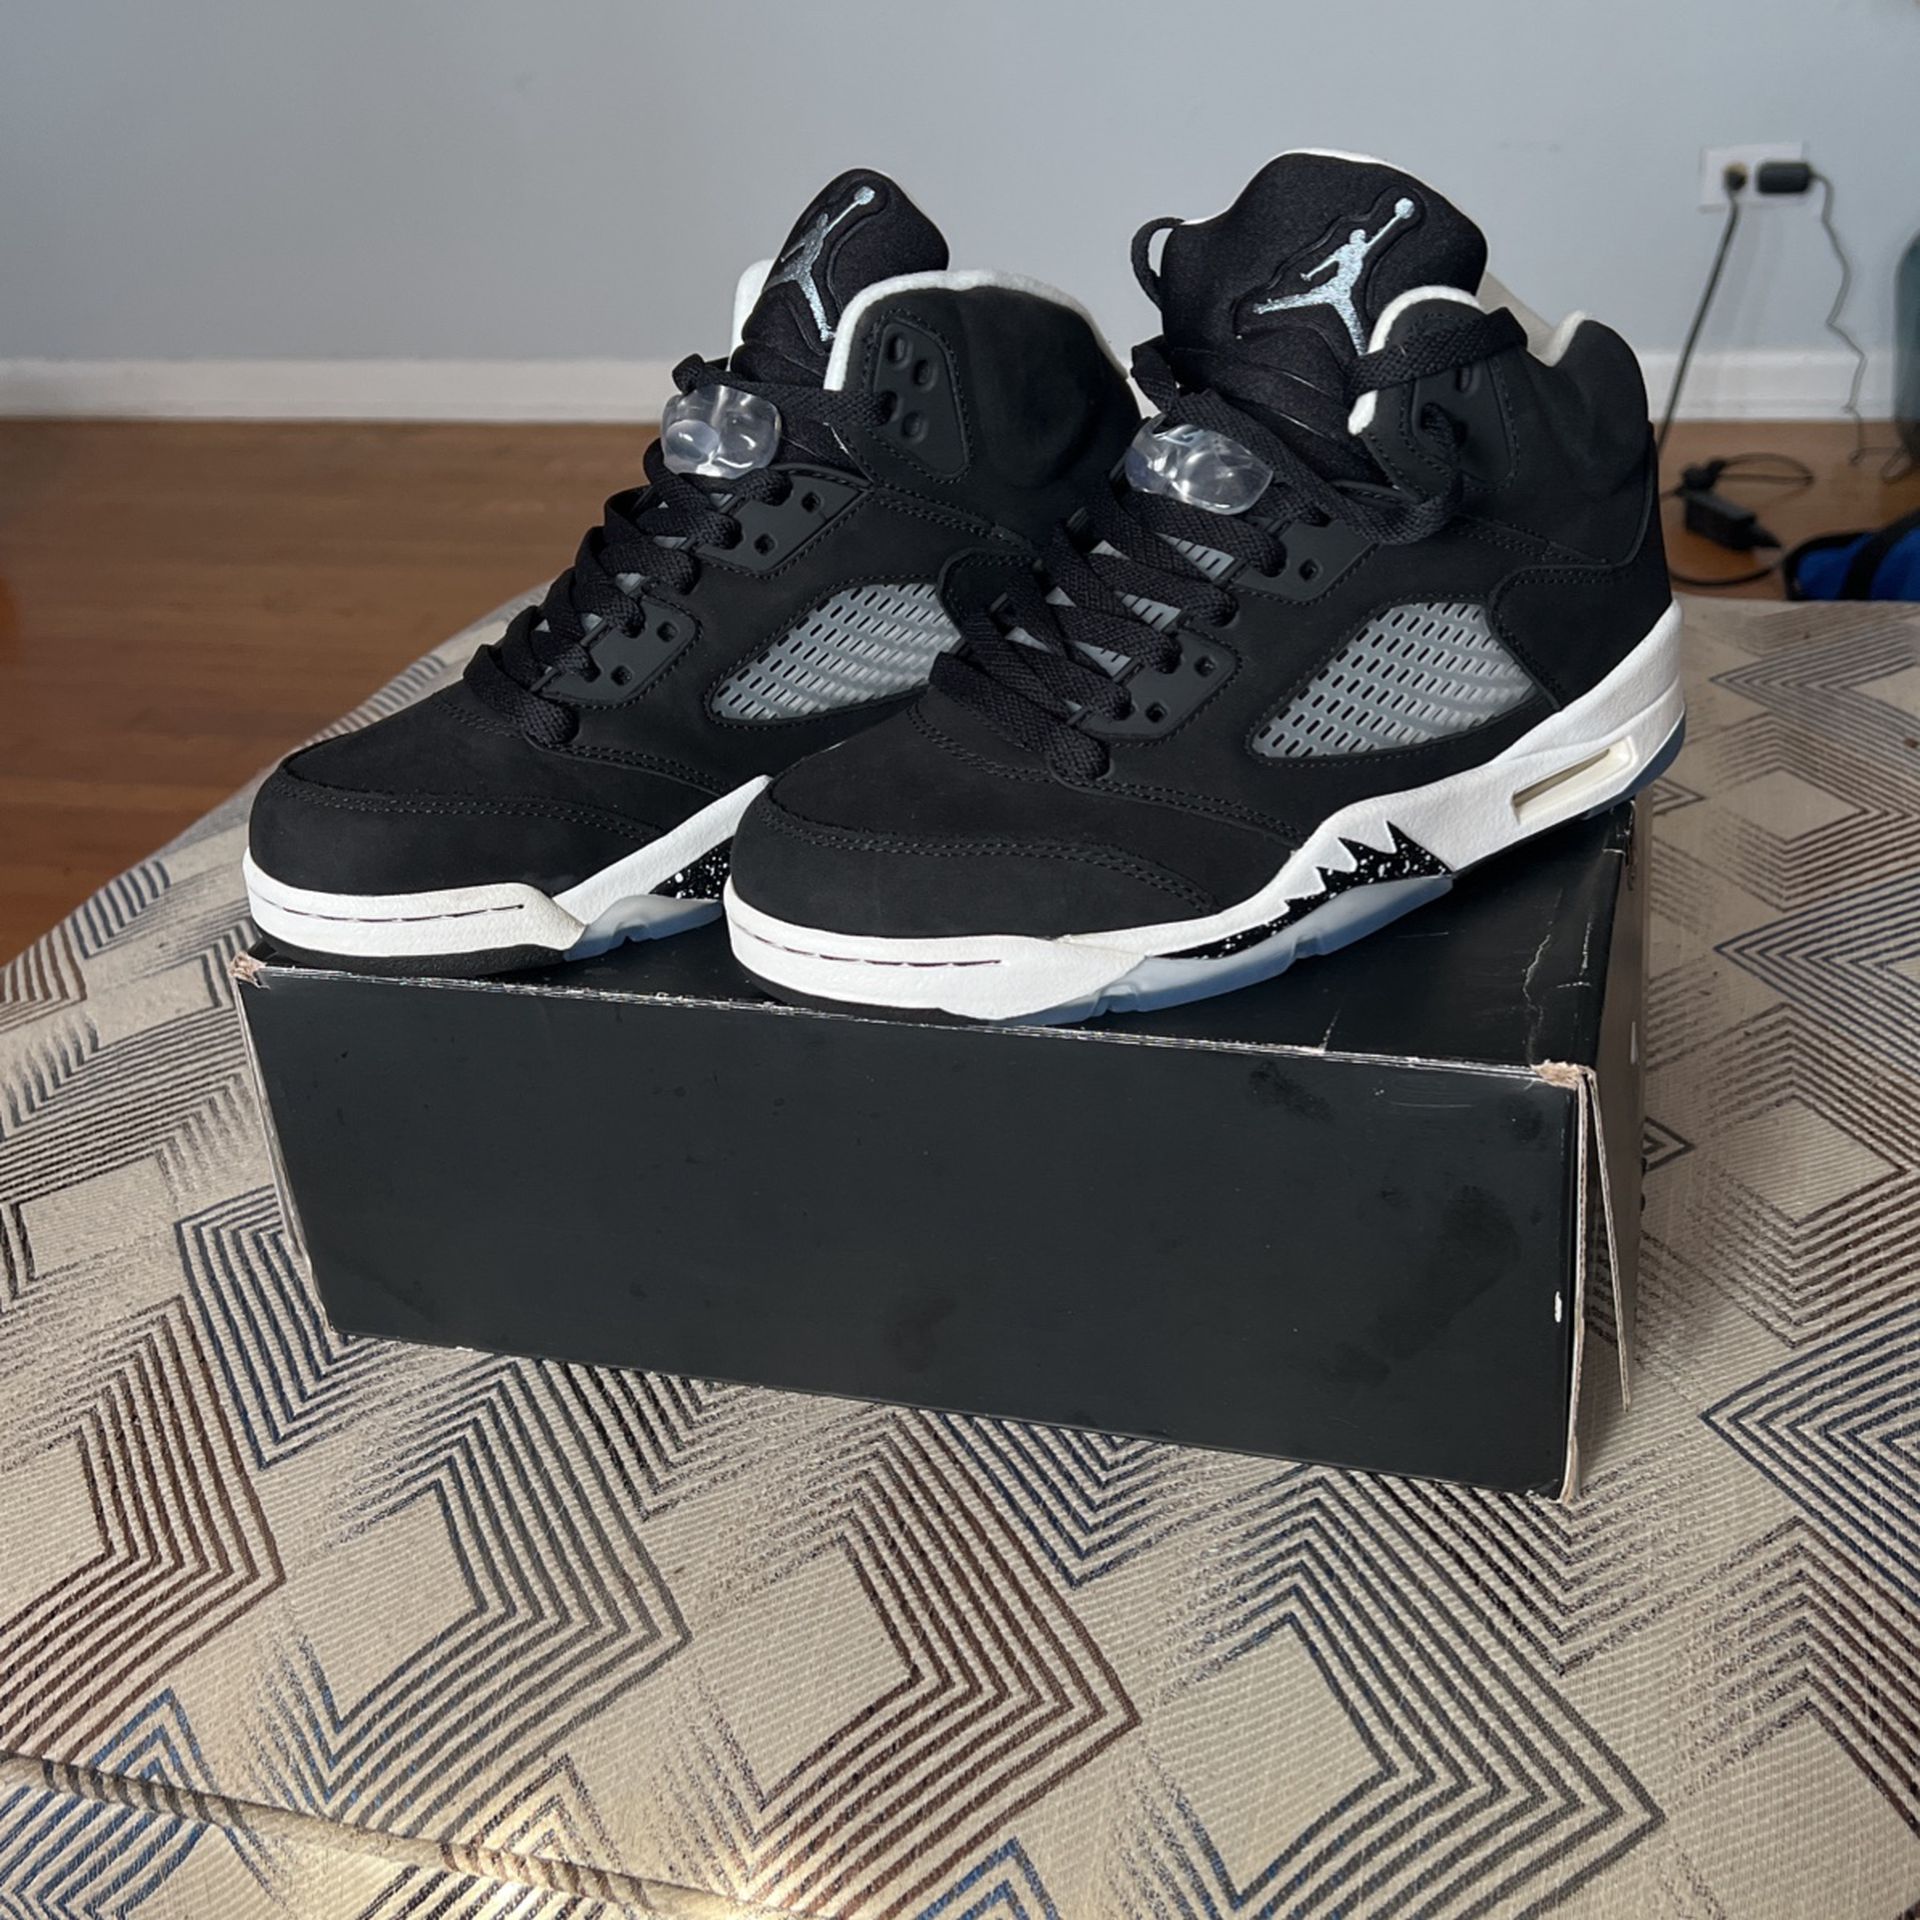 Air Jordan Retro 5 Size 7.5 New In Box 